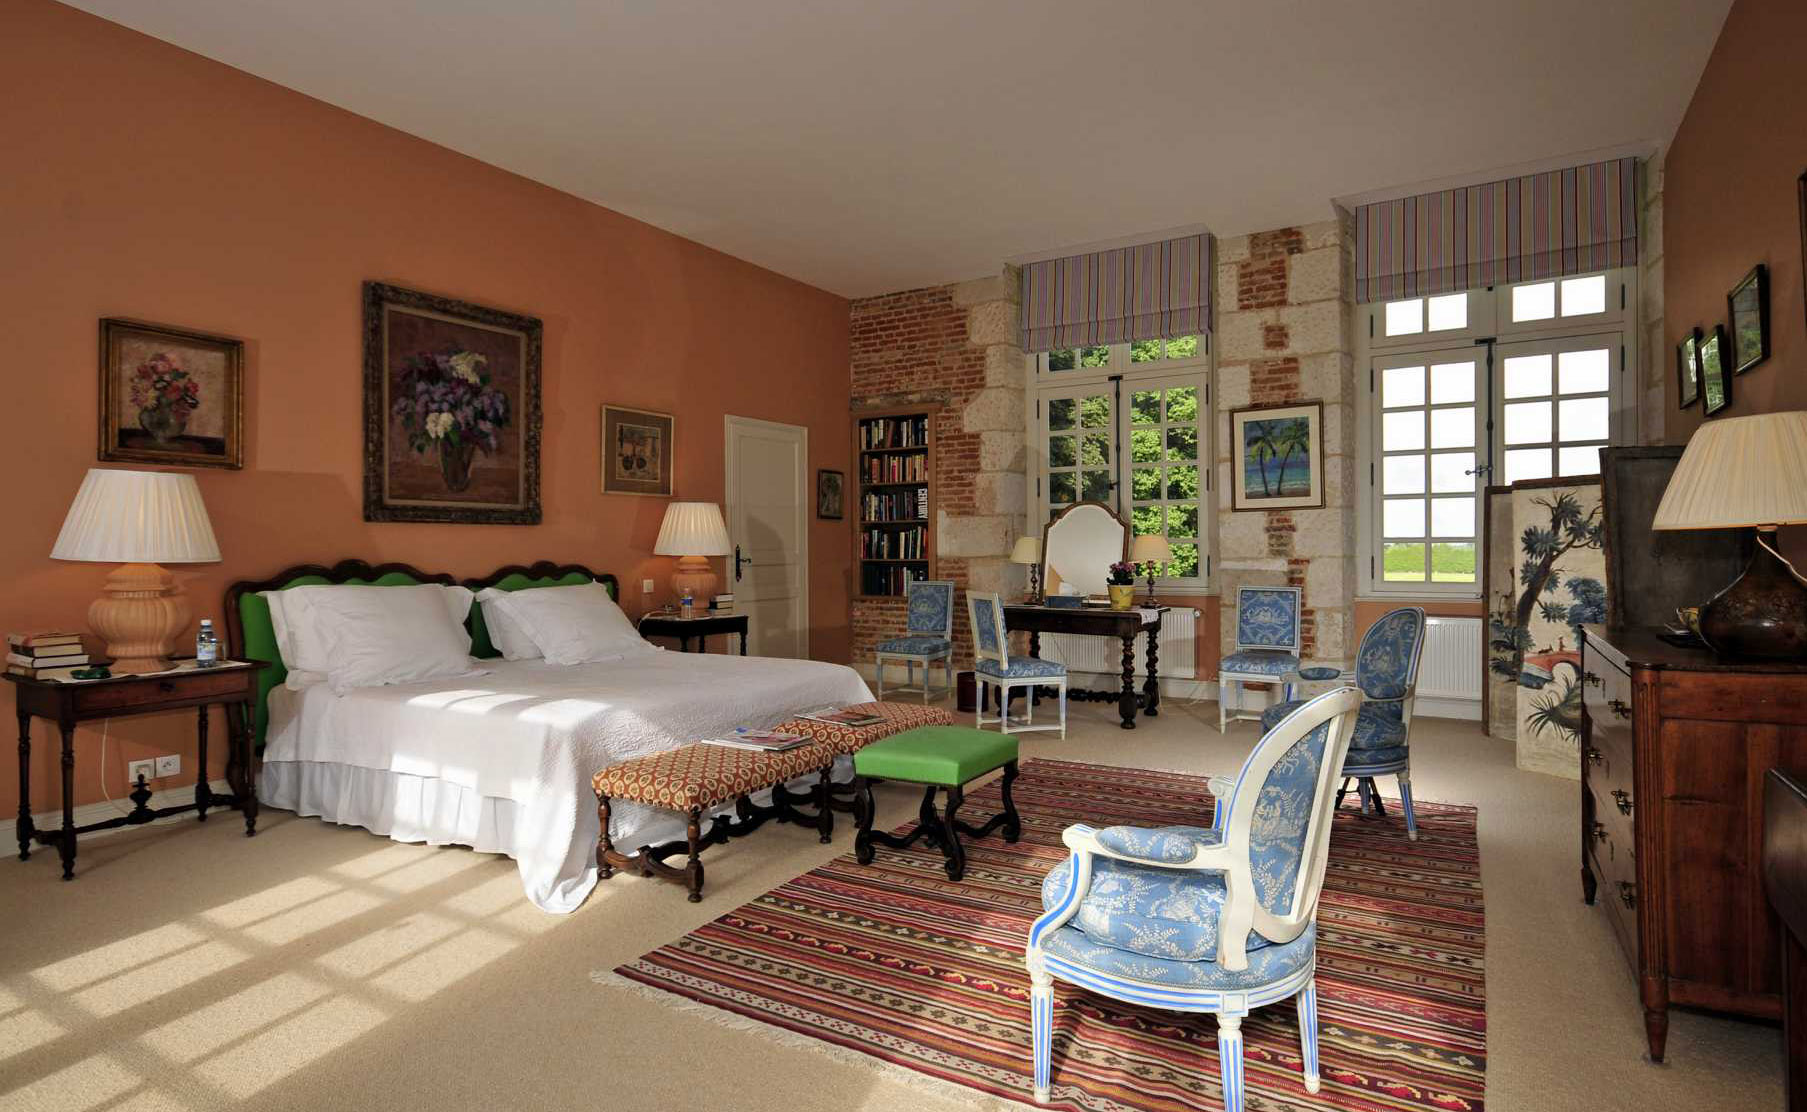 Lovelydays luxury service apartment rental - Saint-Maclou - Chateau Edouard - Lovelysuite - 5 bedrooms - 5 bathrooms - King bed - 527aba444562 - Lovelydays